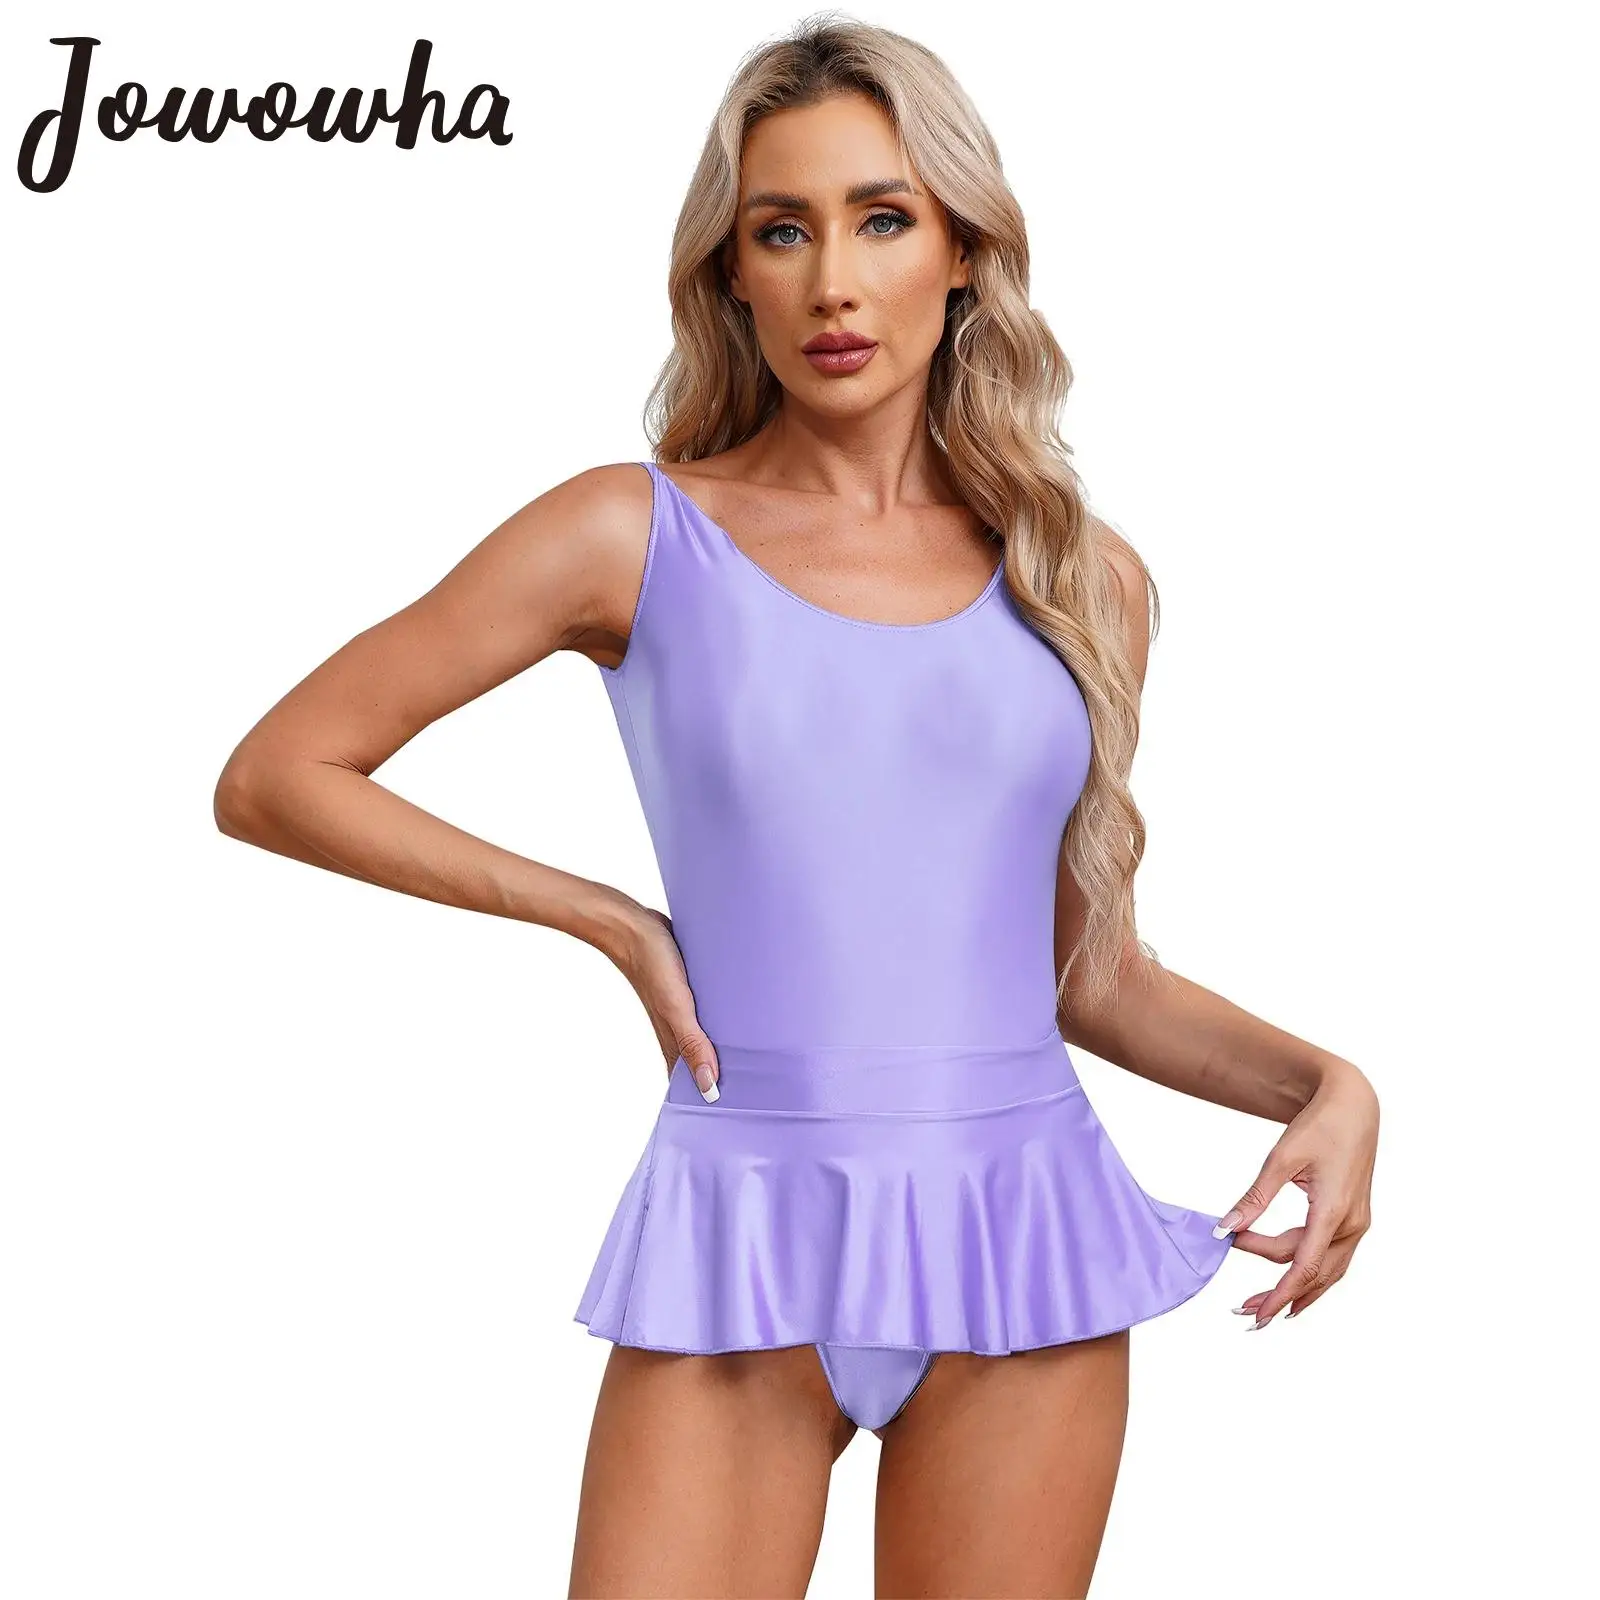 

Womens Glossy Sleeveless High Cut Bodysuit with Low Rise Ruffled Miniskirt Sport Fitness Yoga Beach Pool Party Swimwear Clubwear